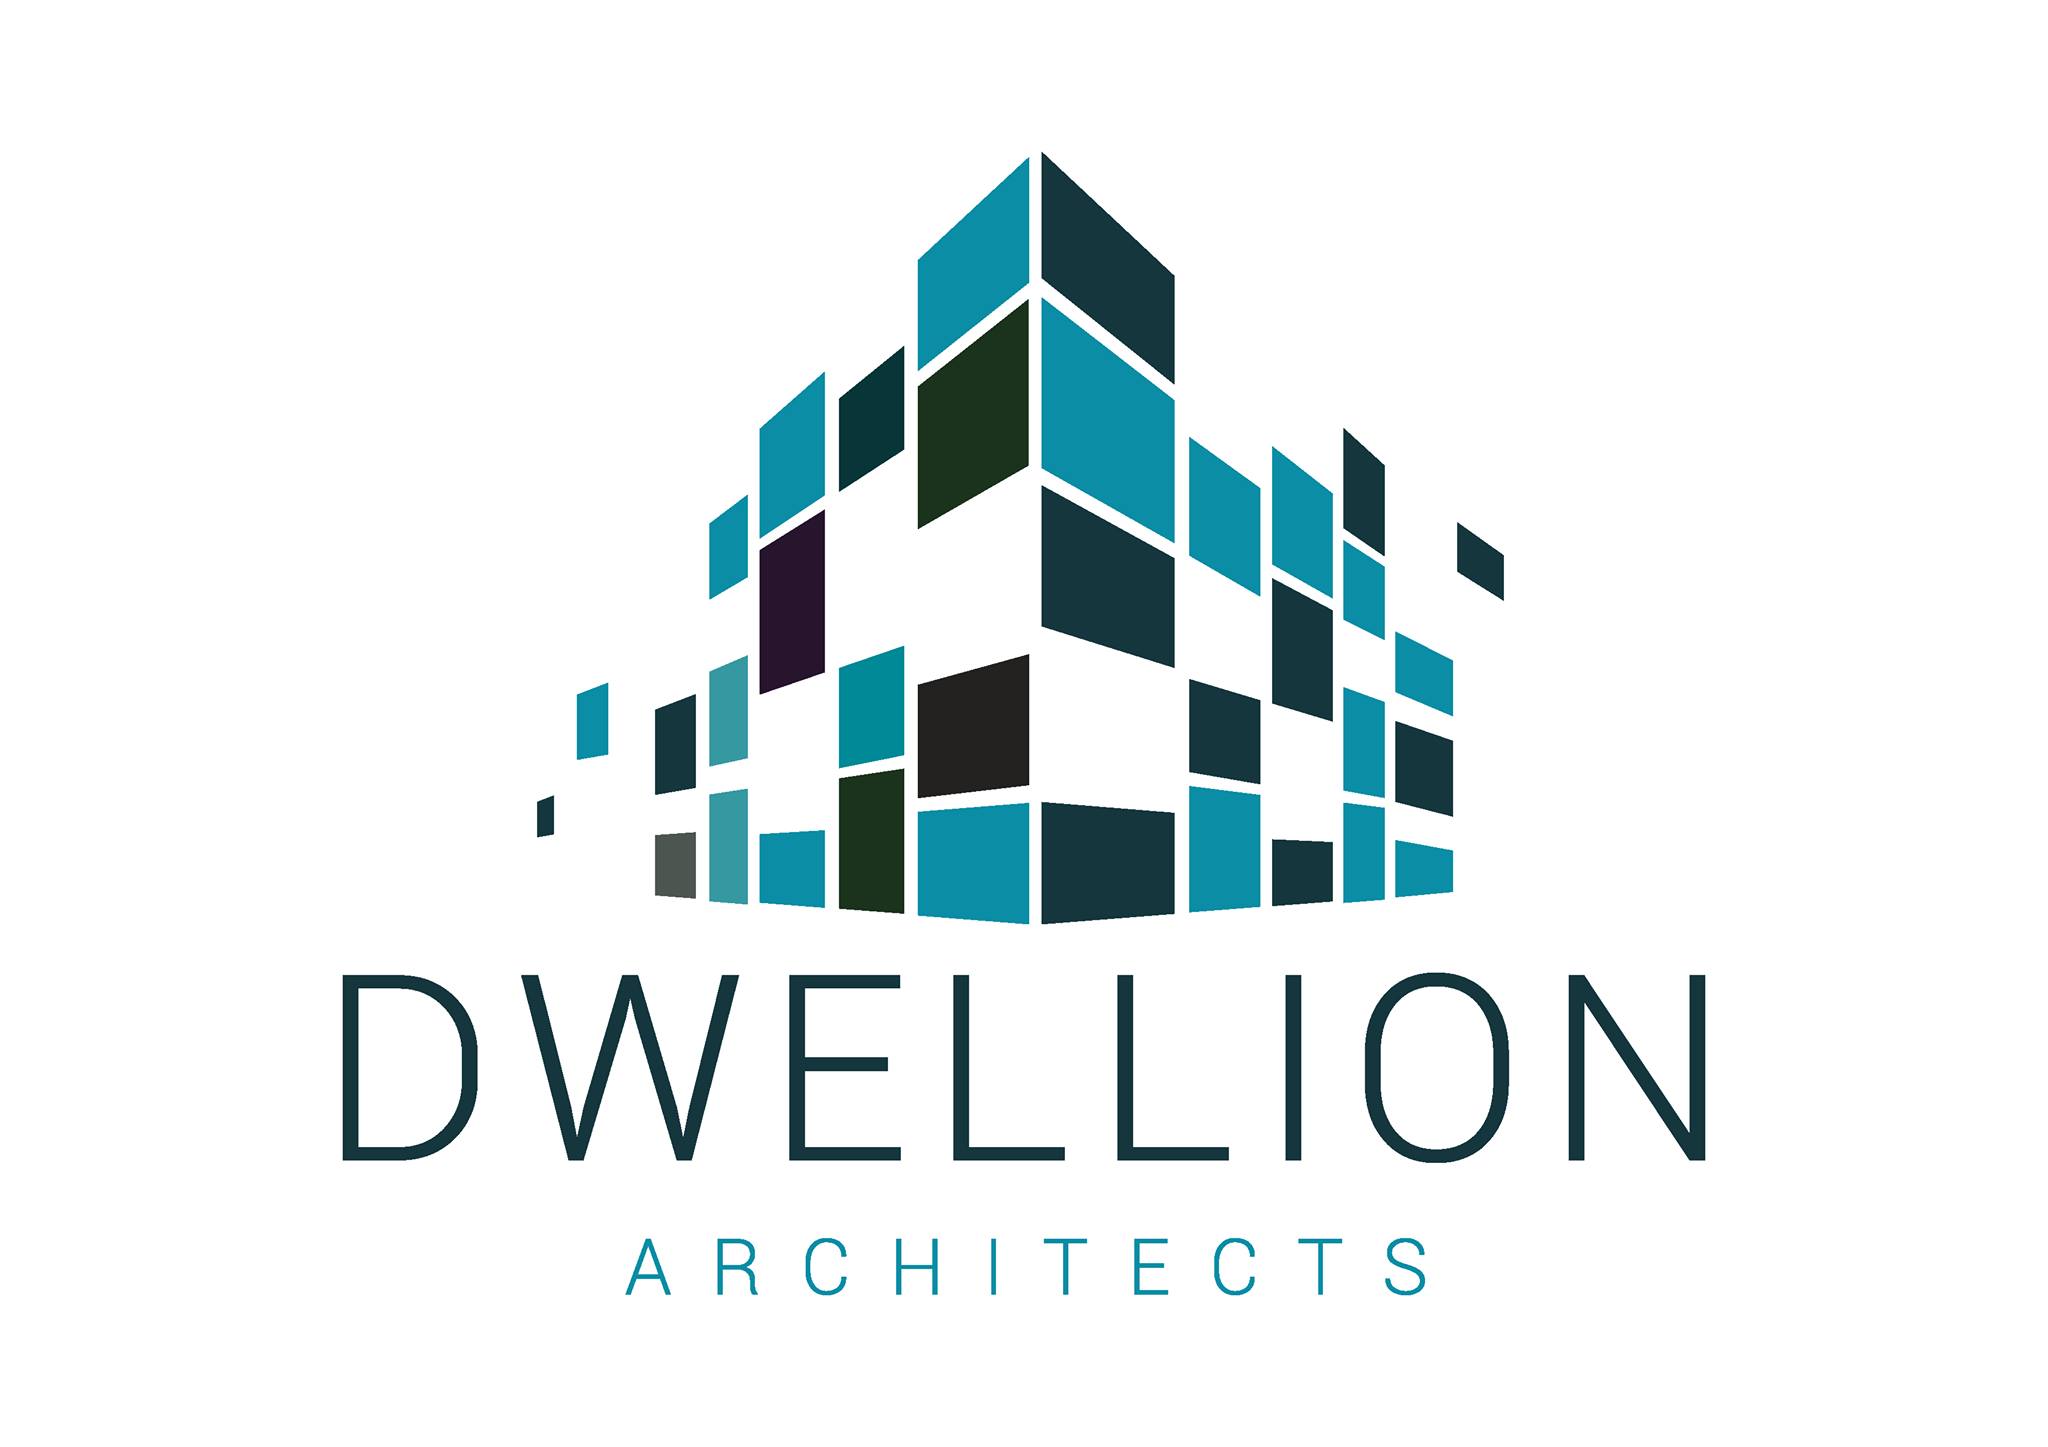 Dwellion Architecture & Interior Design|Accounting Services|Professional Services